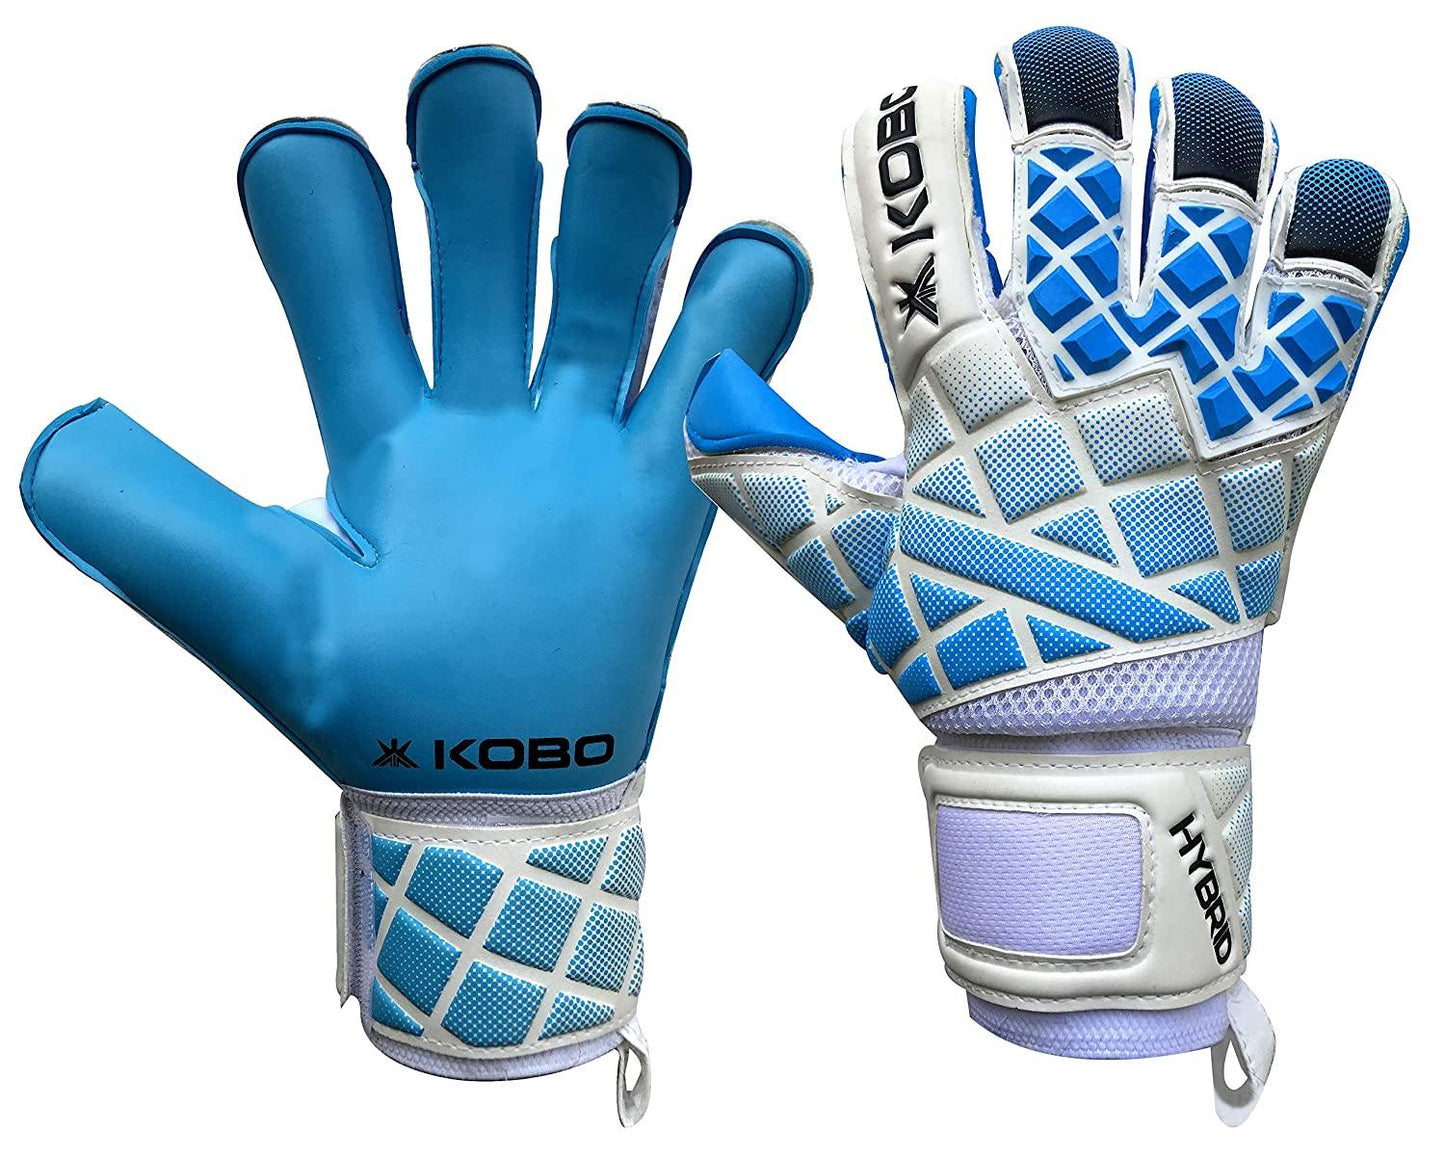 Kobo Hybrid Goal Keeper Glove, White Blue - Best Price online Prokicksports.com